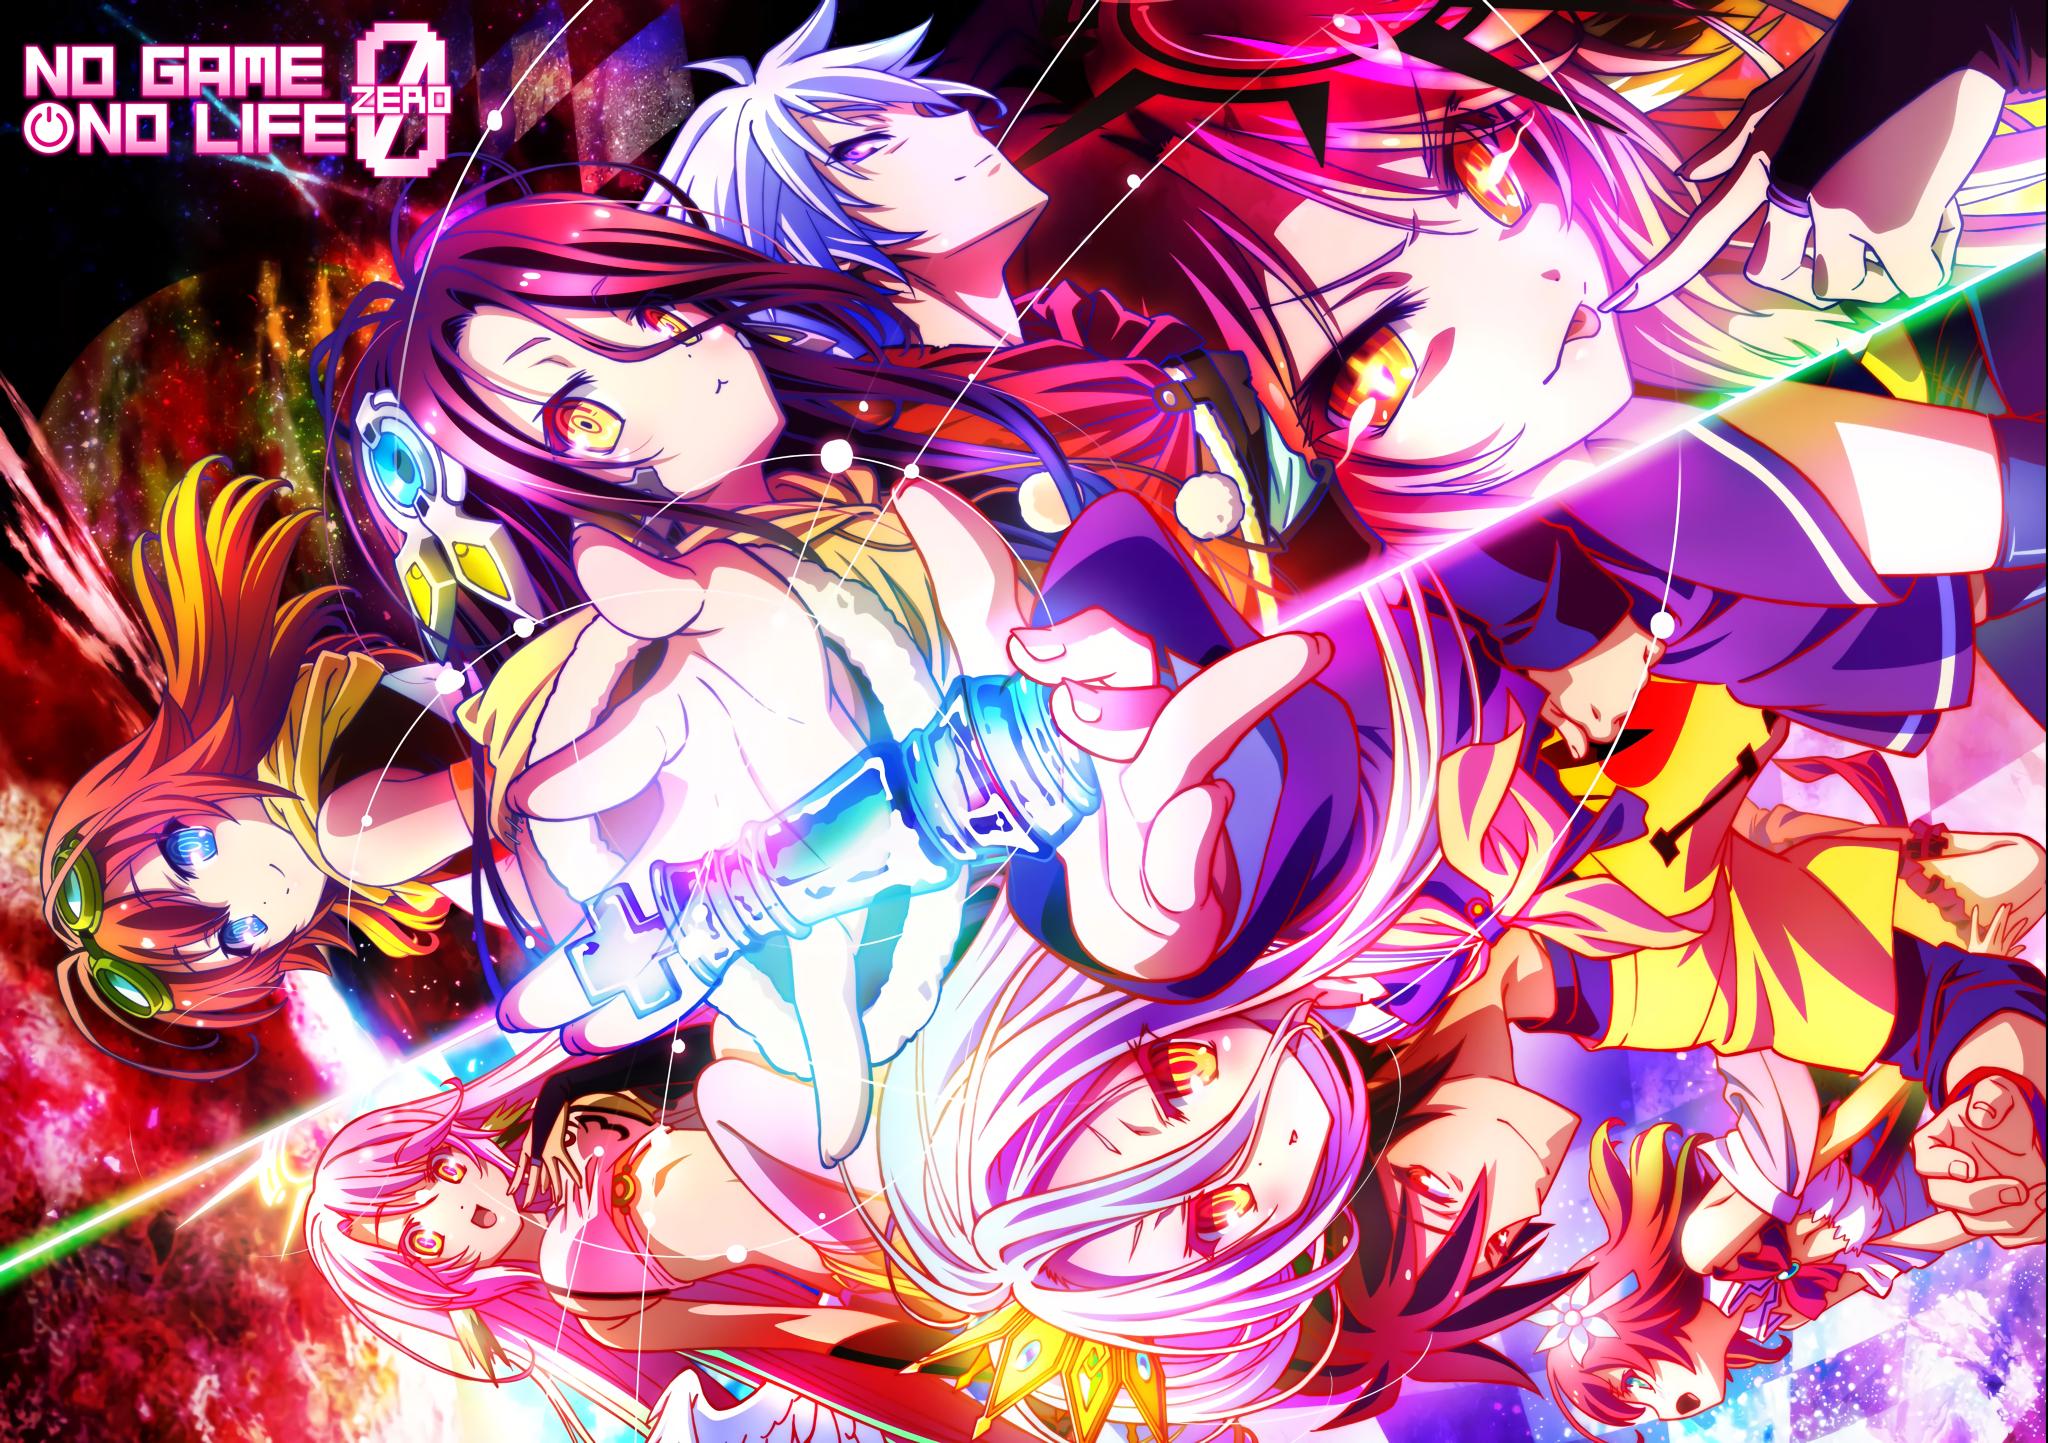 Download wallpaper 1280x900 toradora!, anime, characters